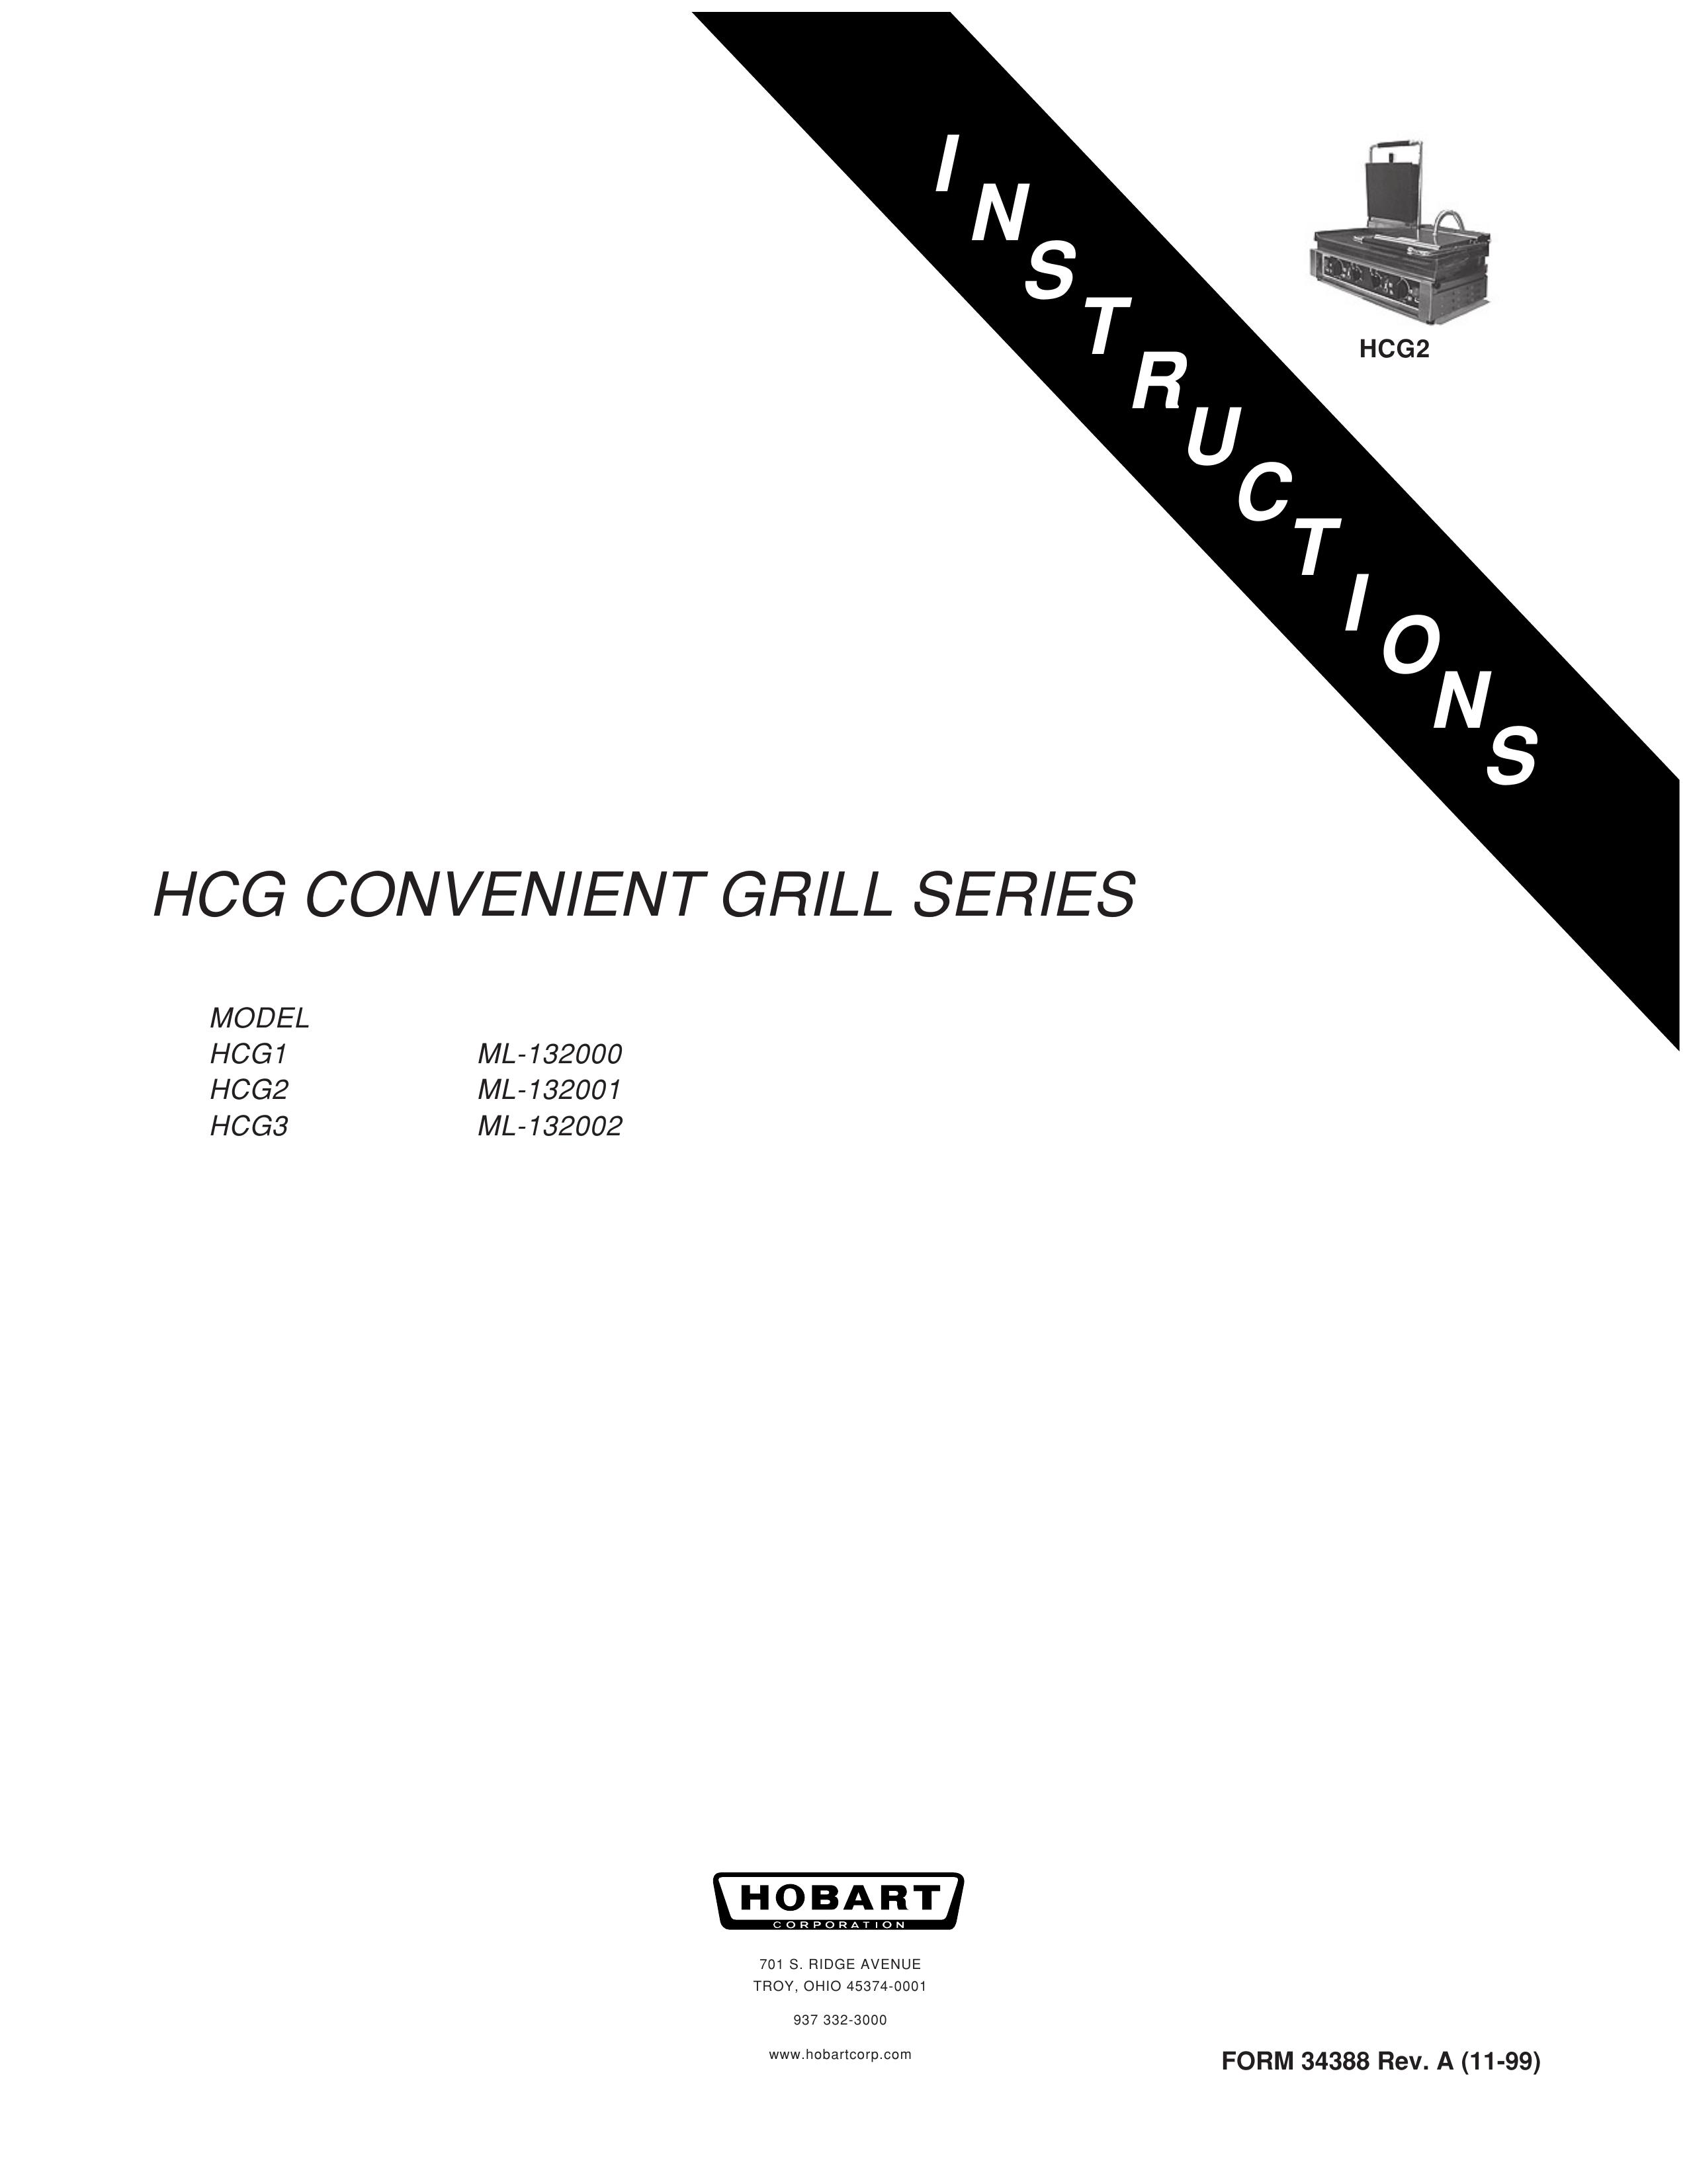 Hobart HCG3 ML-132002 Charcoal Grill User Manual